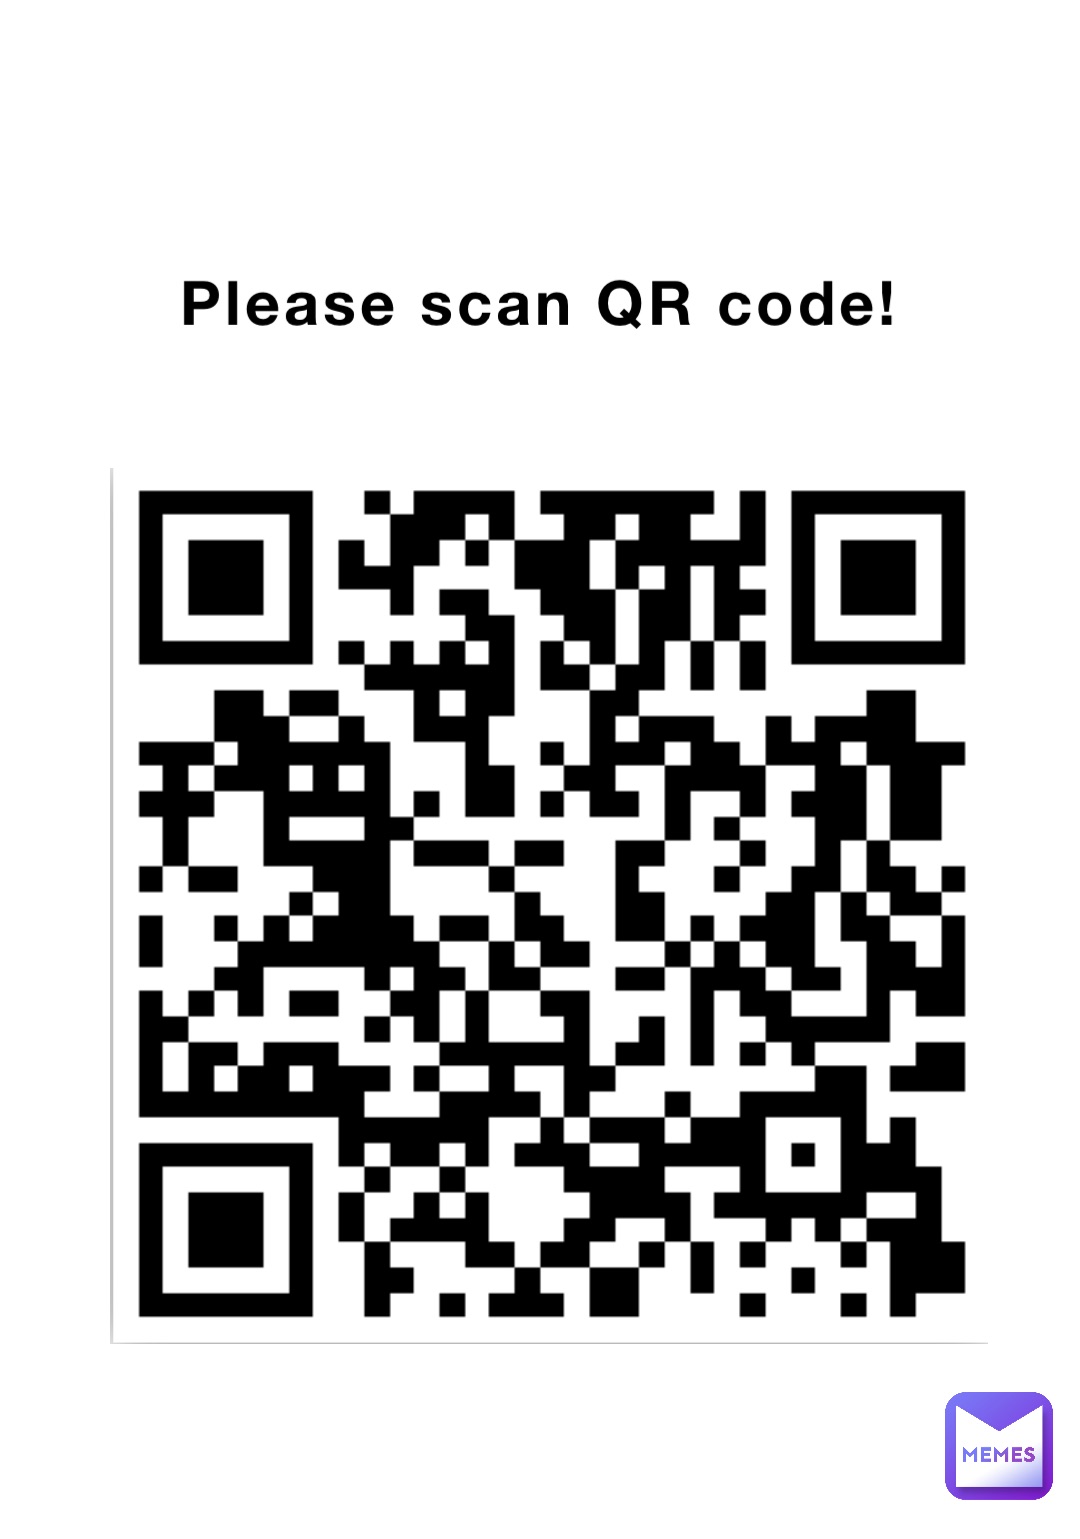 Please scan QR code!